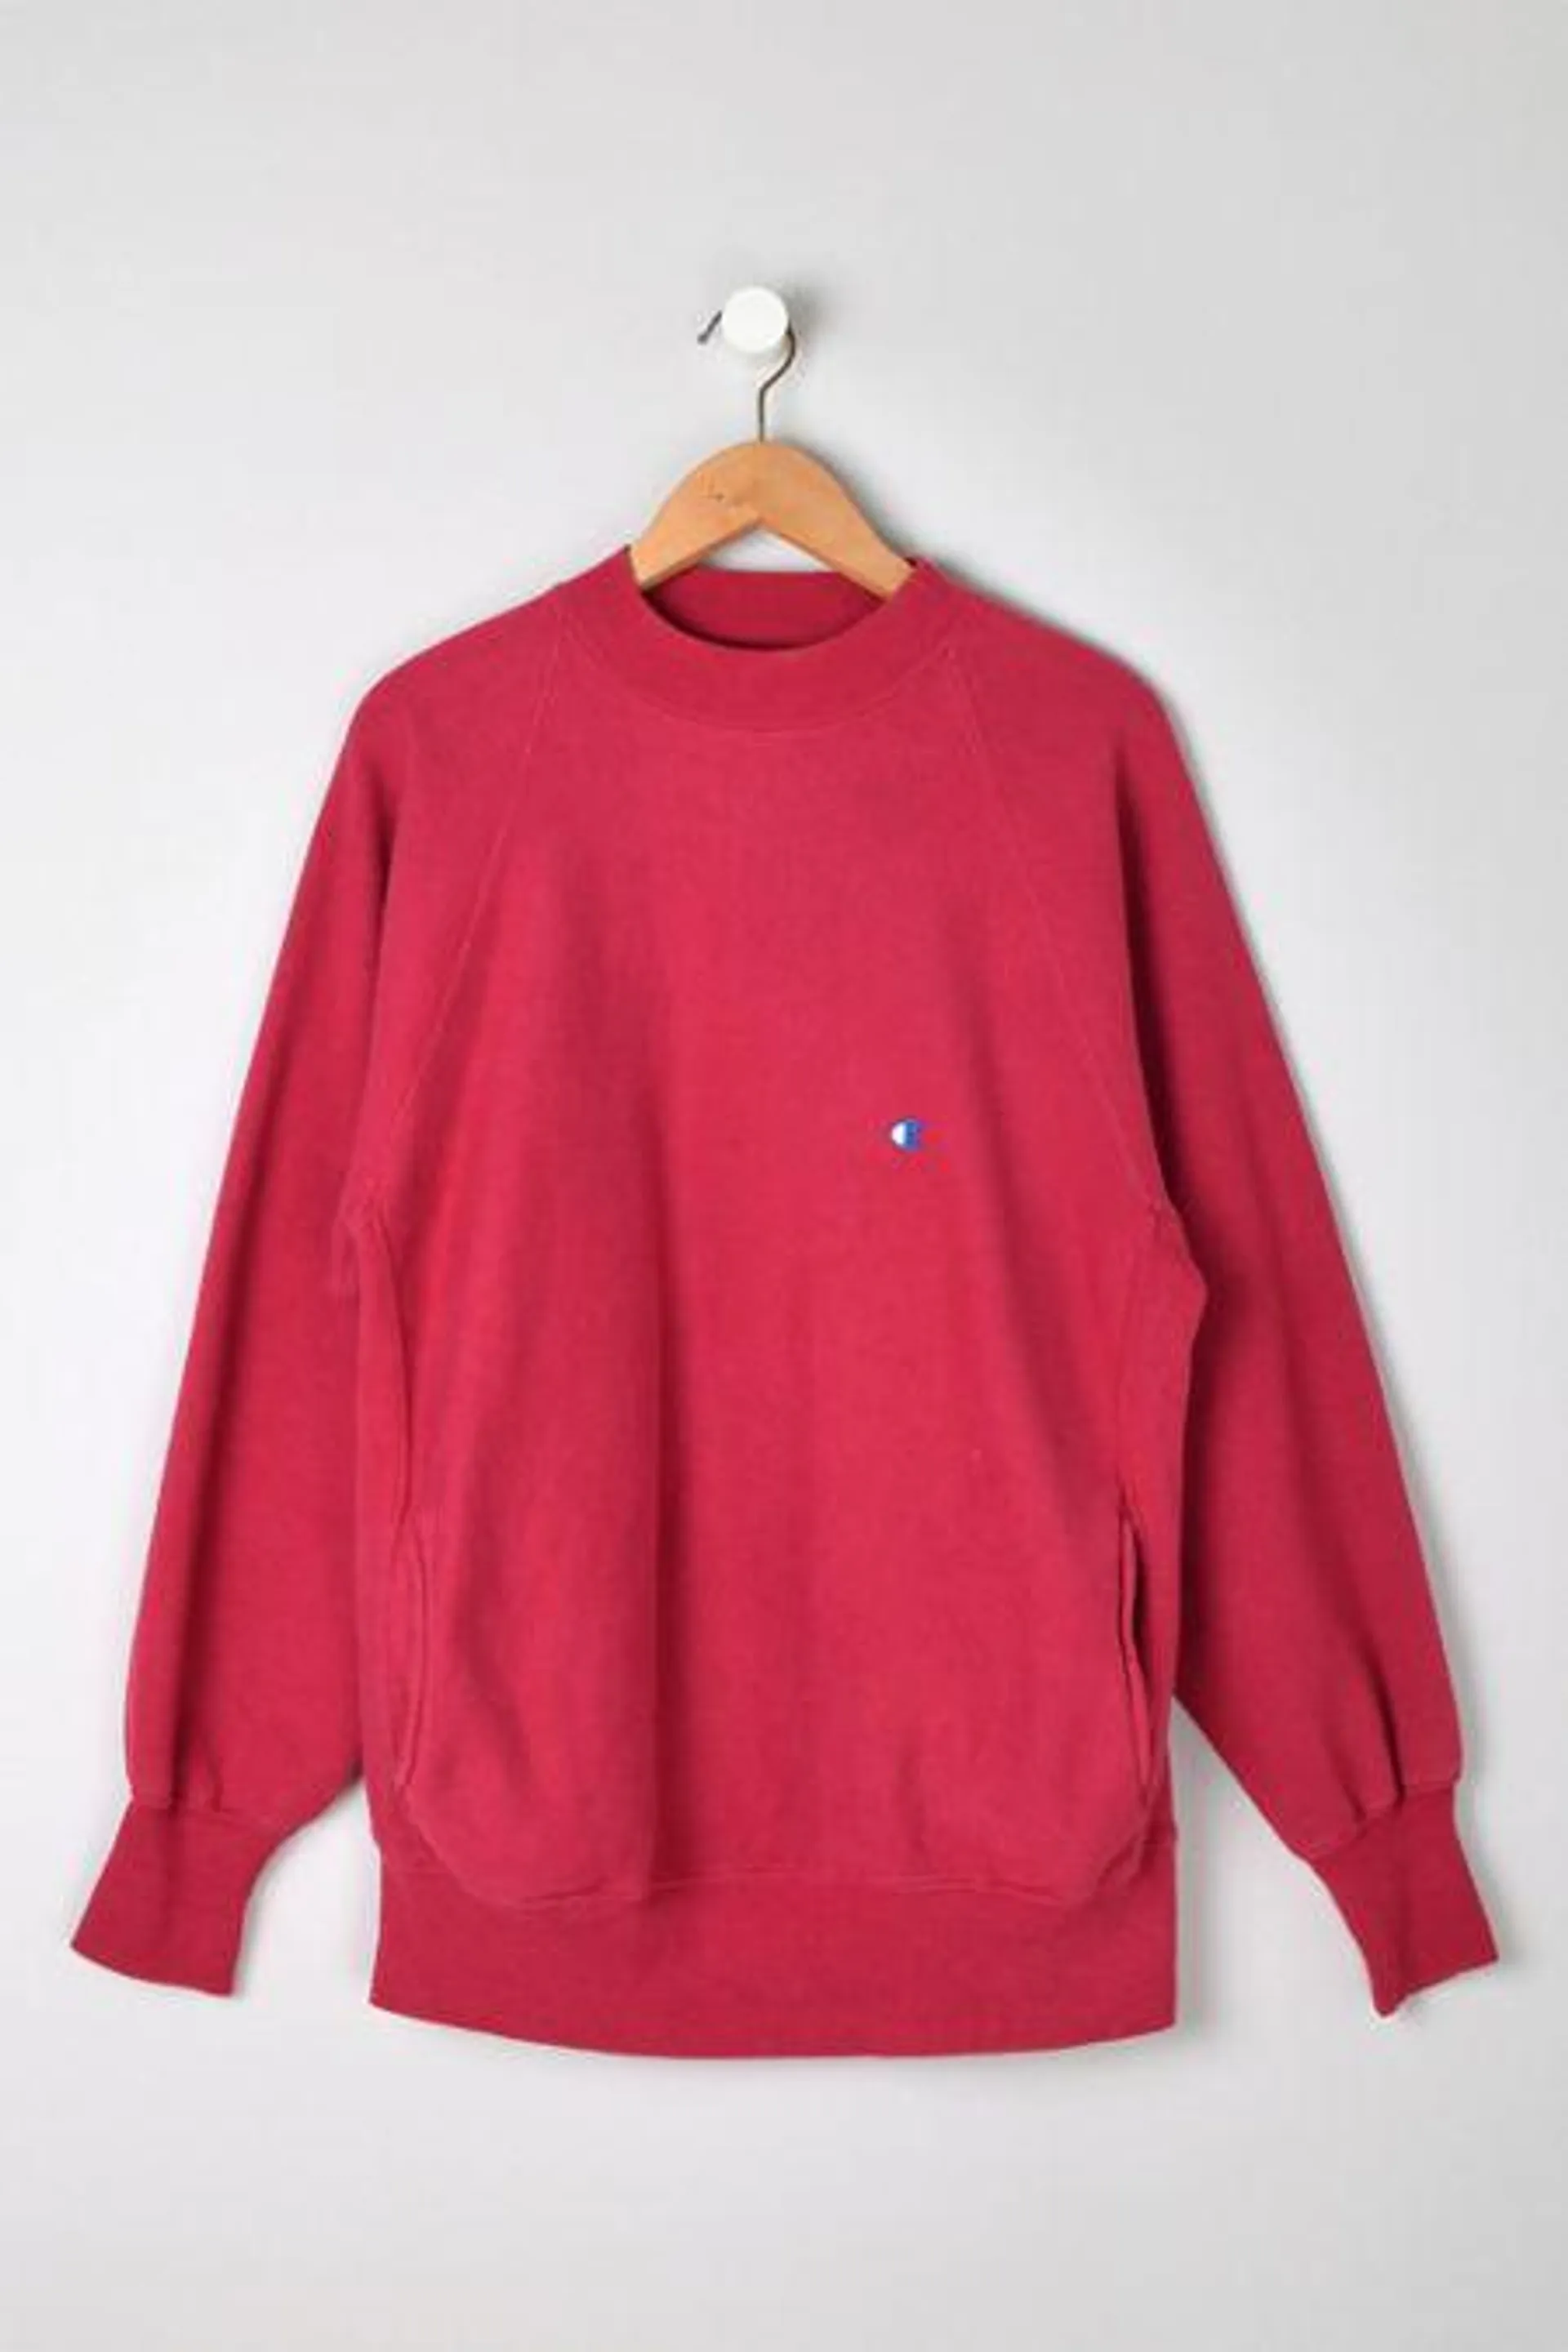 Vintage 90s Champion Raglan Reverse-Weave Cherry Red Sweatshirt